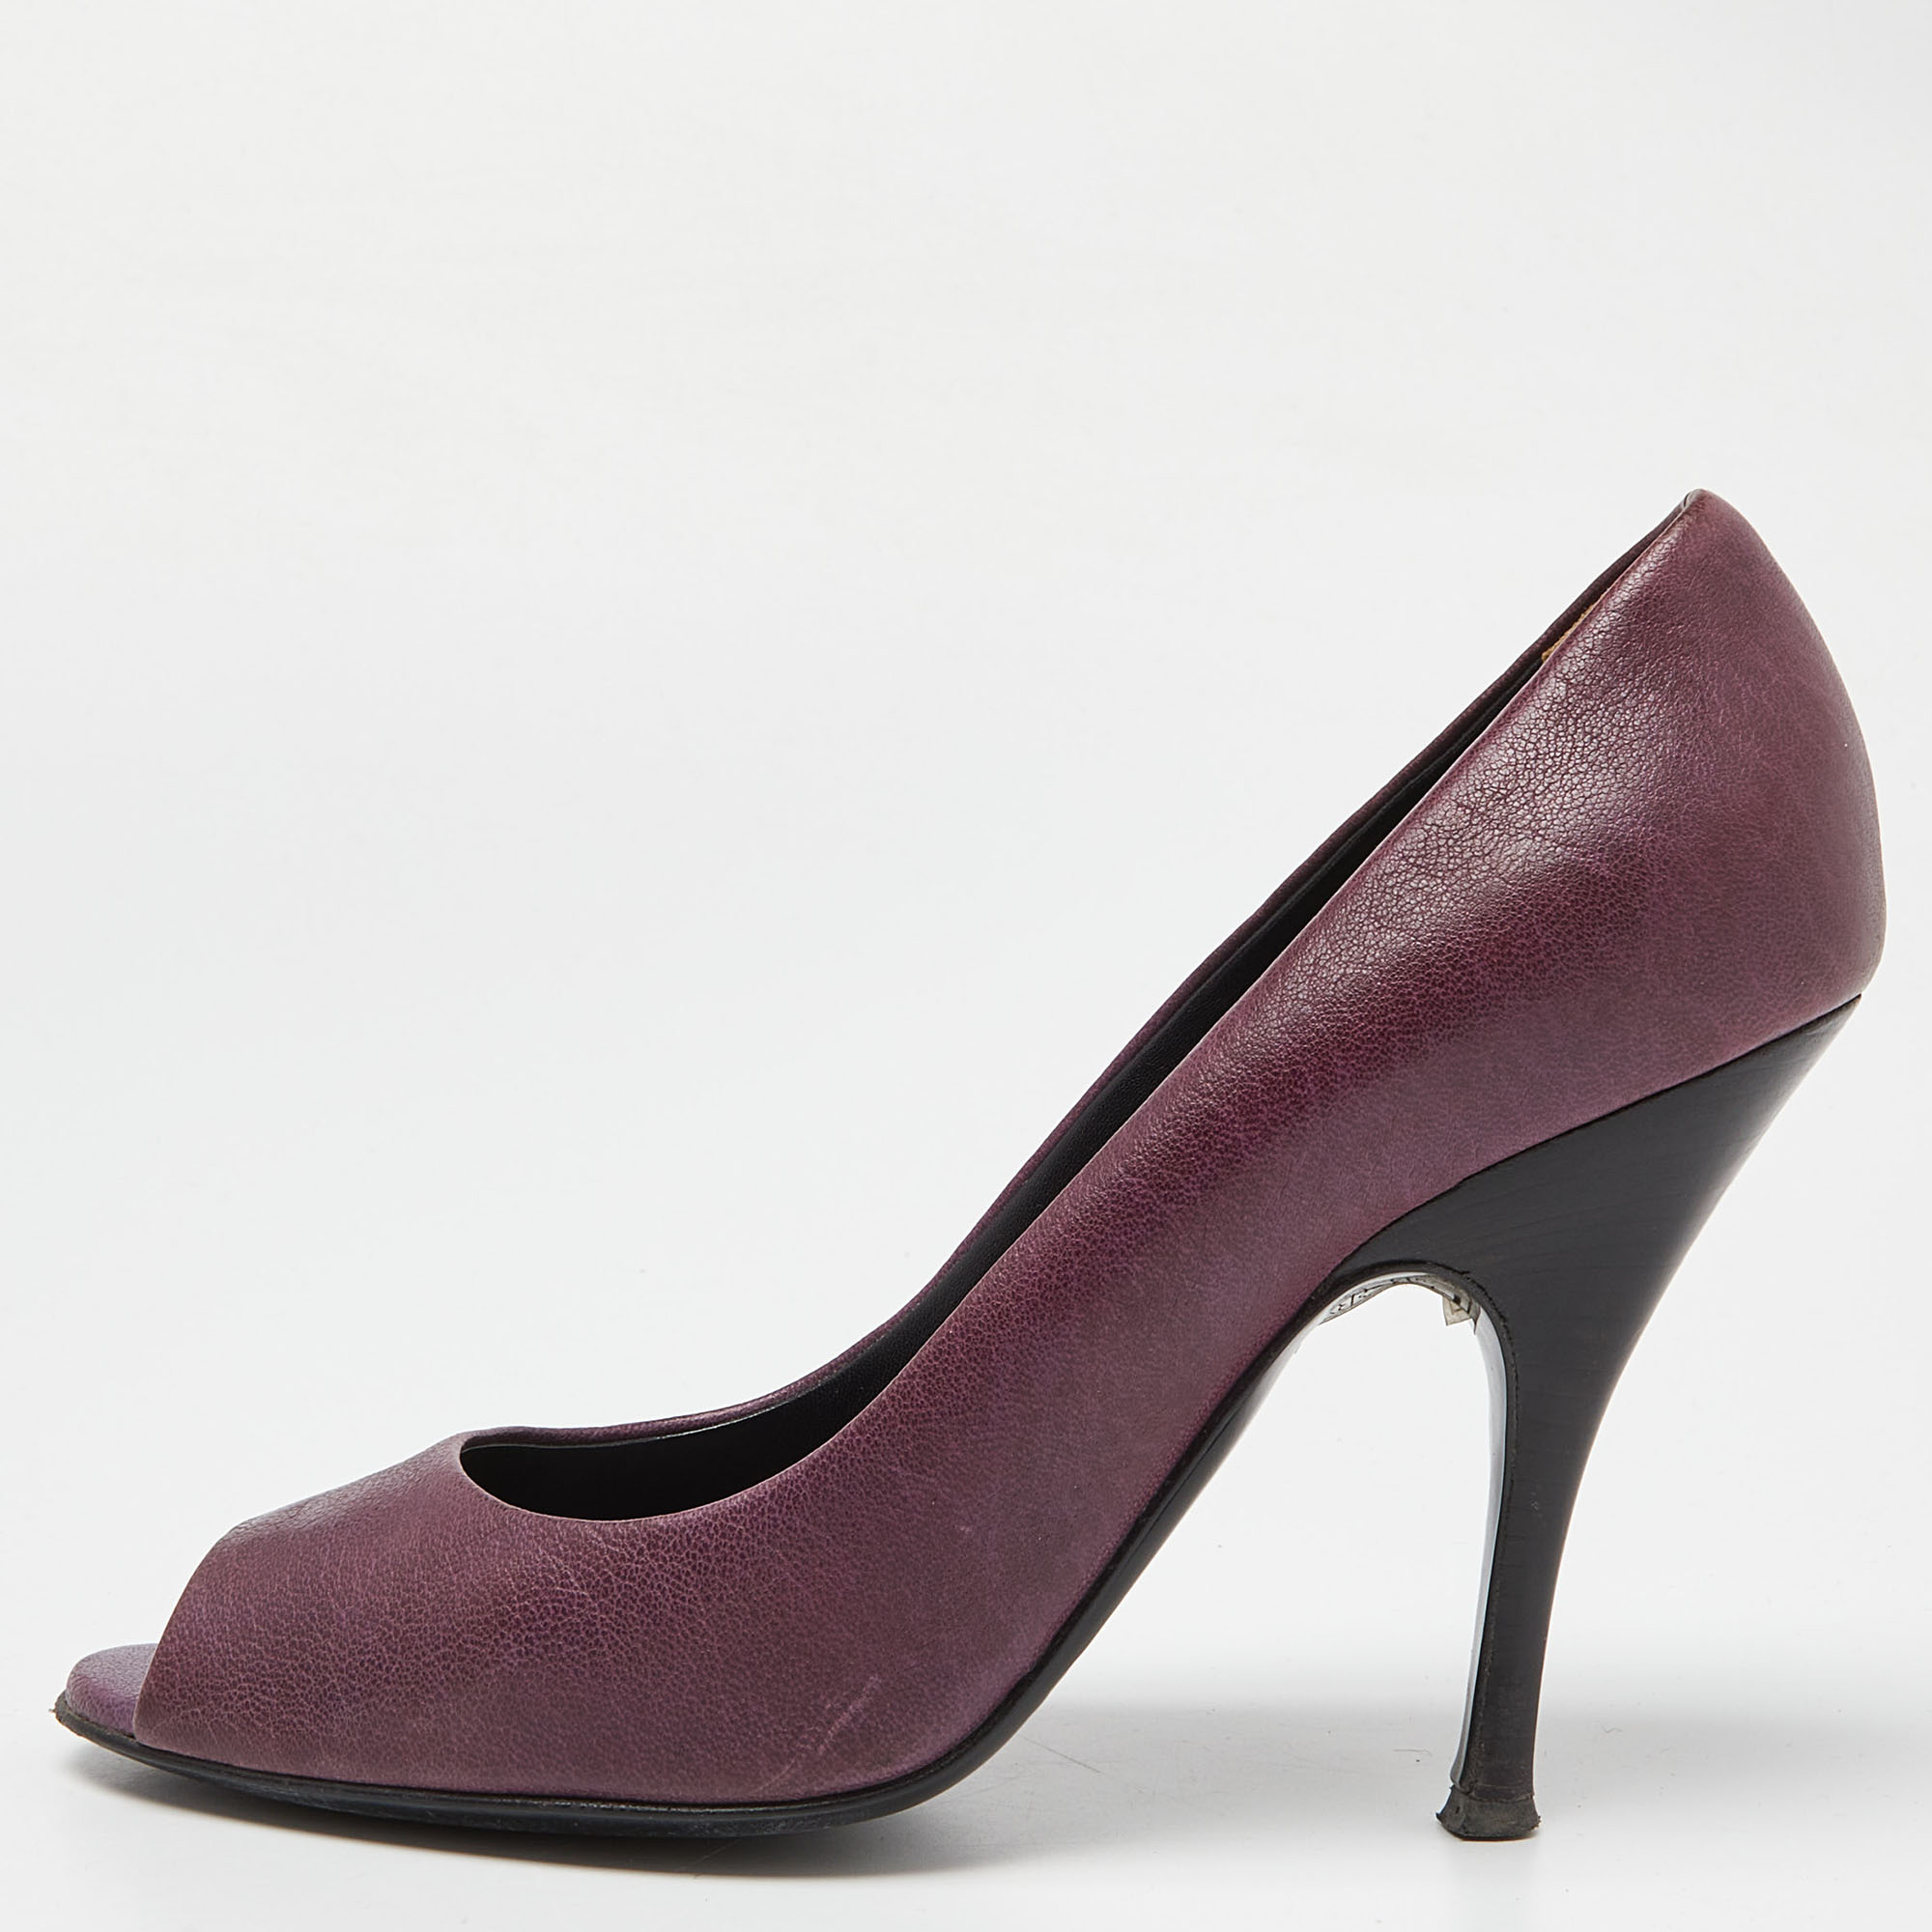 D&g burgundy leather peep toe pumps size 38